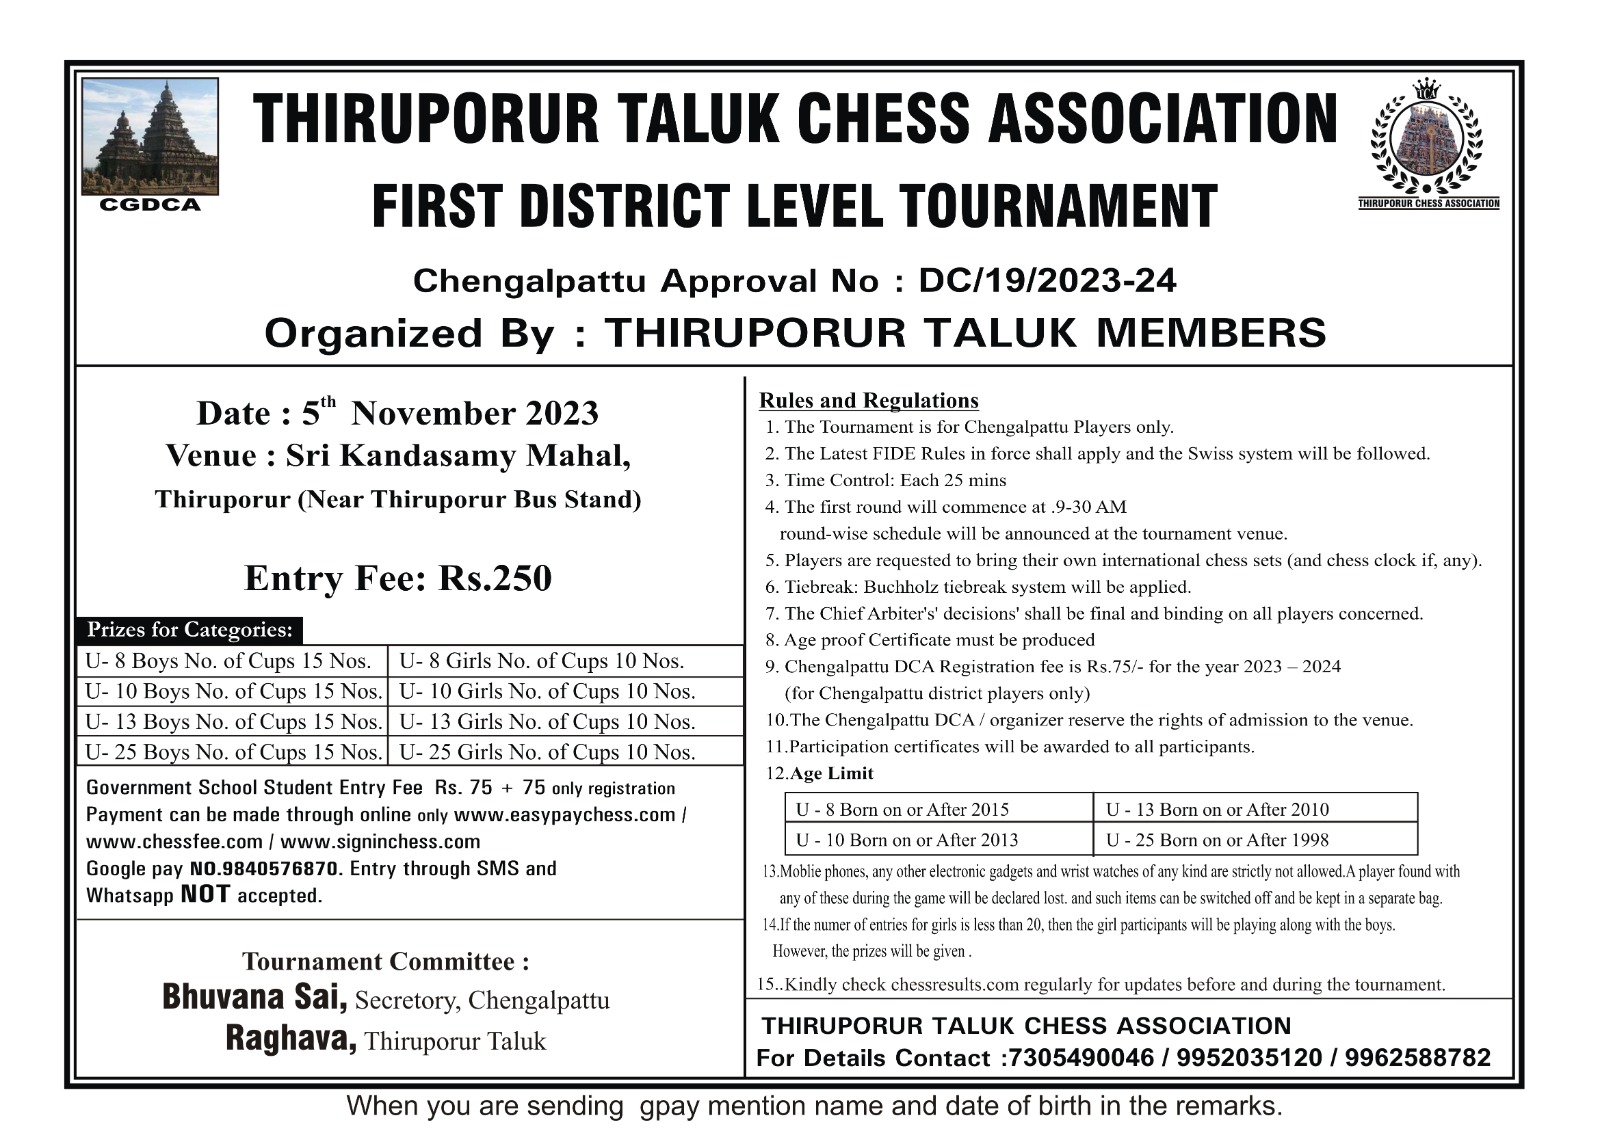 1st Bishan Singh Ji Memorial All India Open FIDE Rating Chess